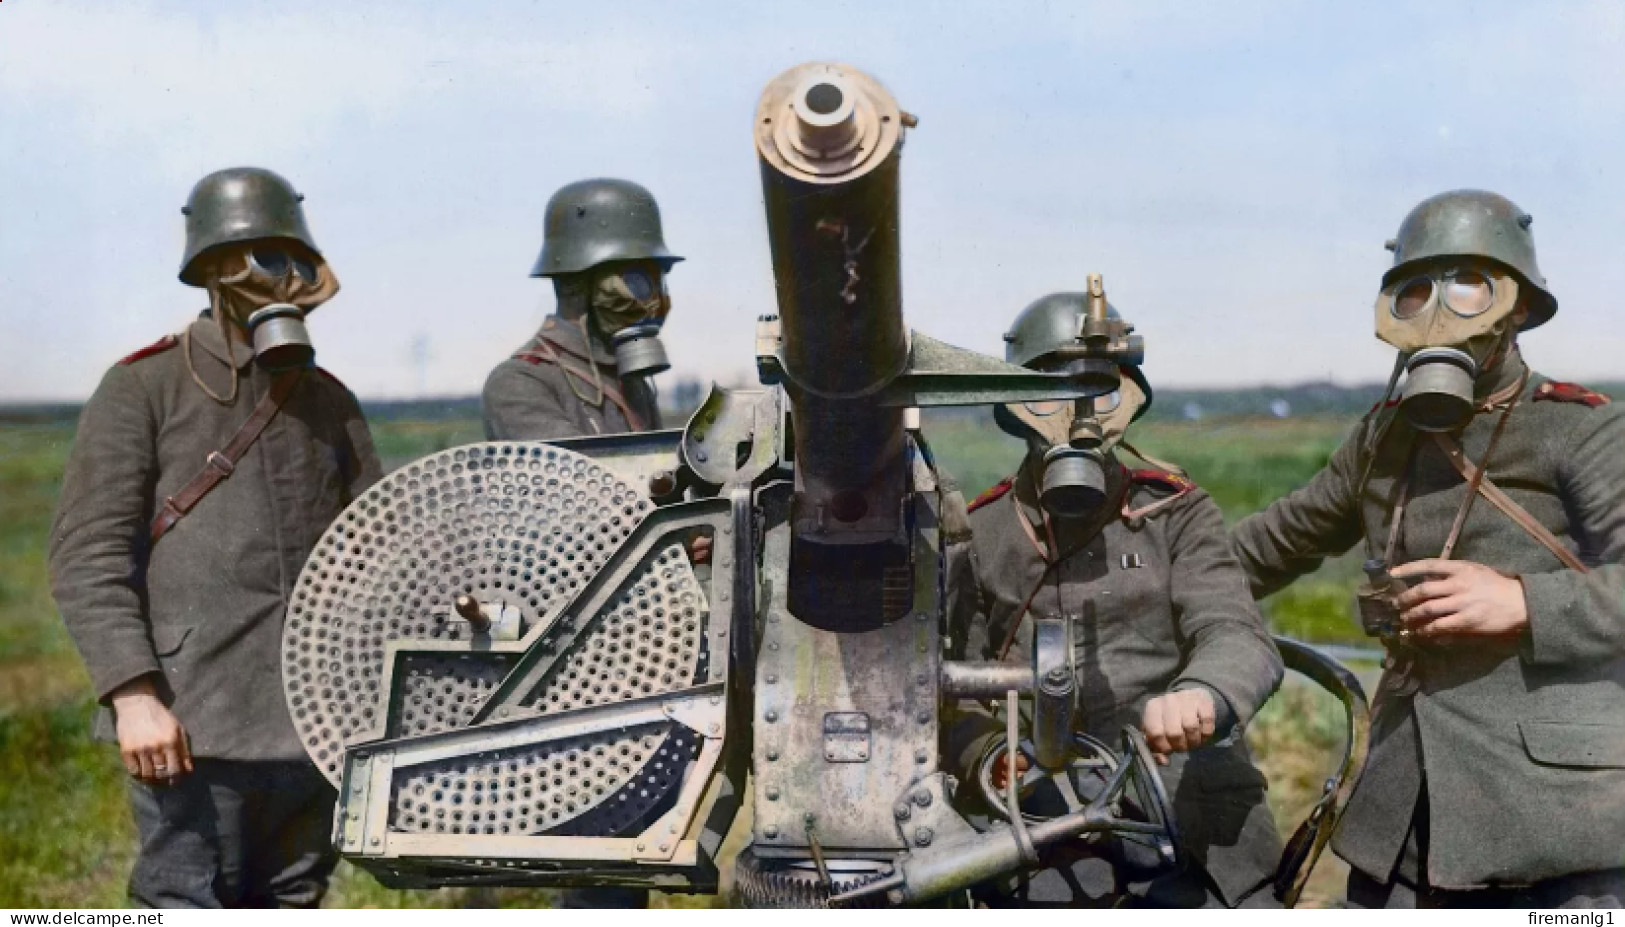 WW1 German M,16 Steel Helmet - (Mod.1916 Stahlhelm) - Afghan Used - Size ET 64